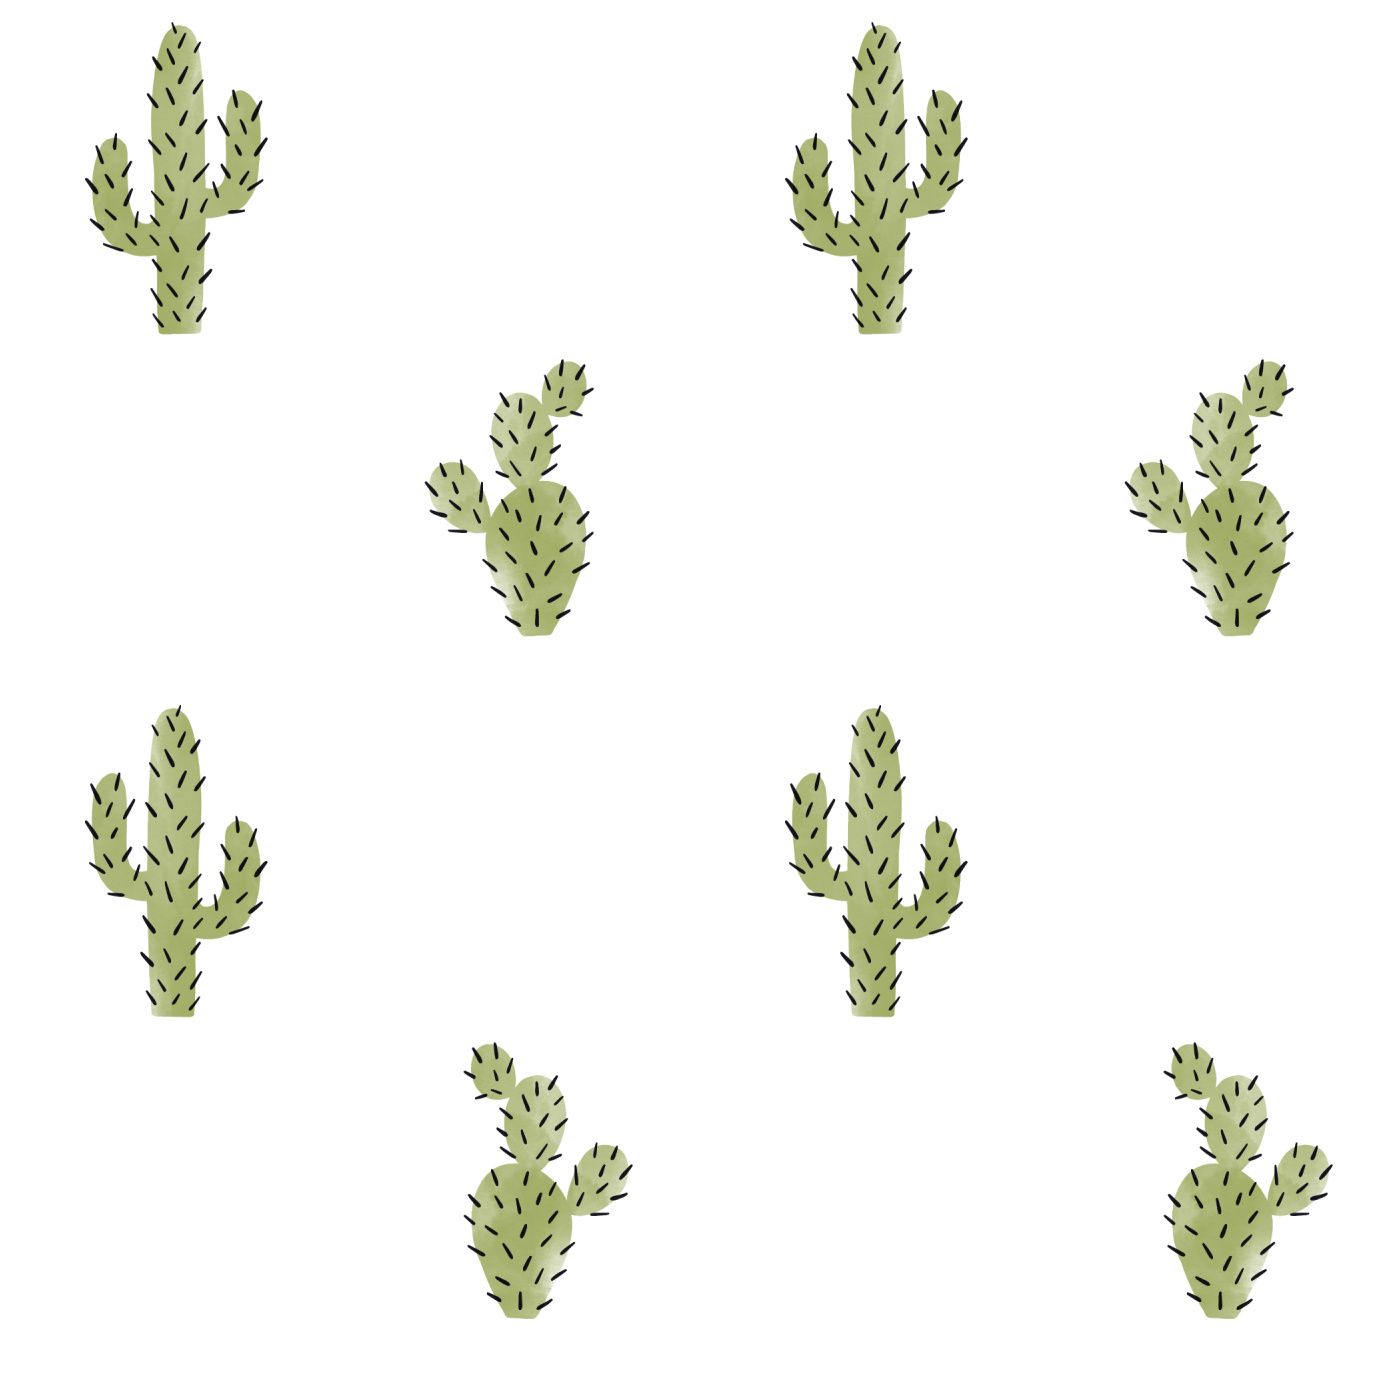 Cactus pattern fabric by kate spade new york - Cactus